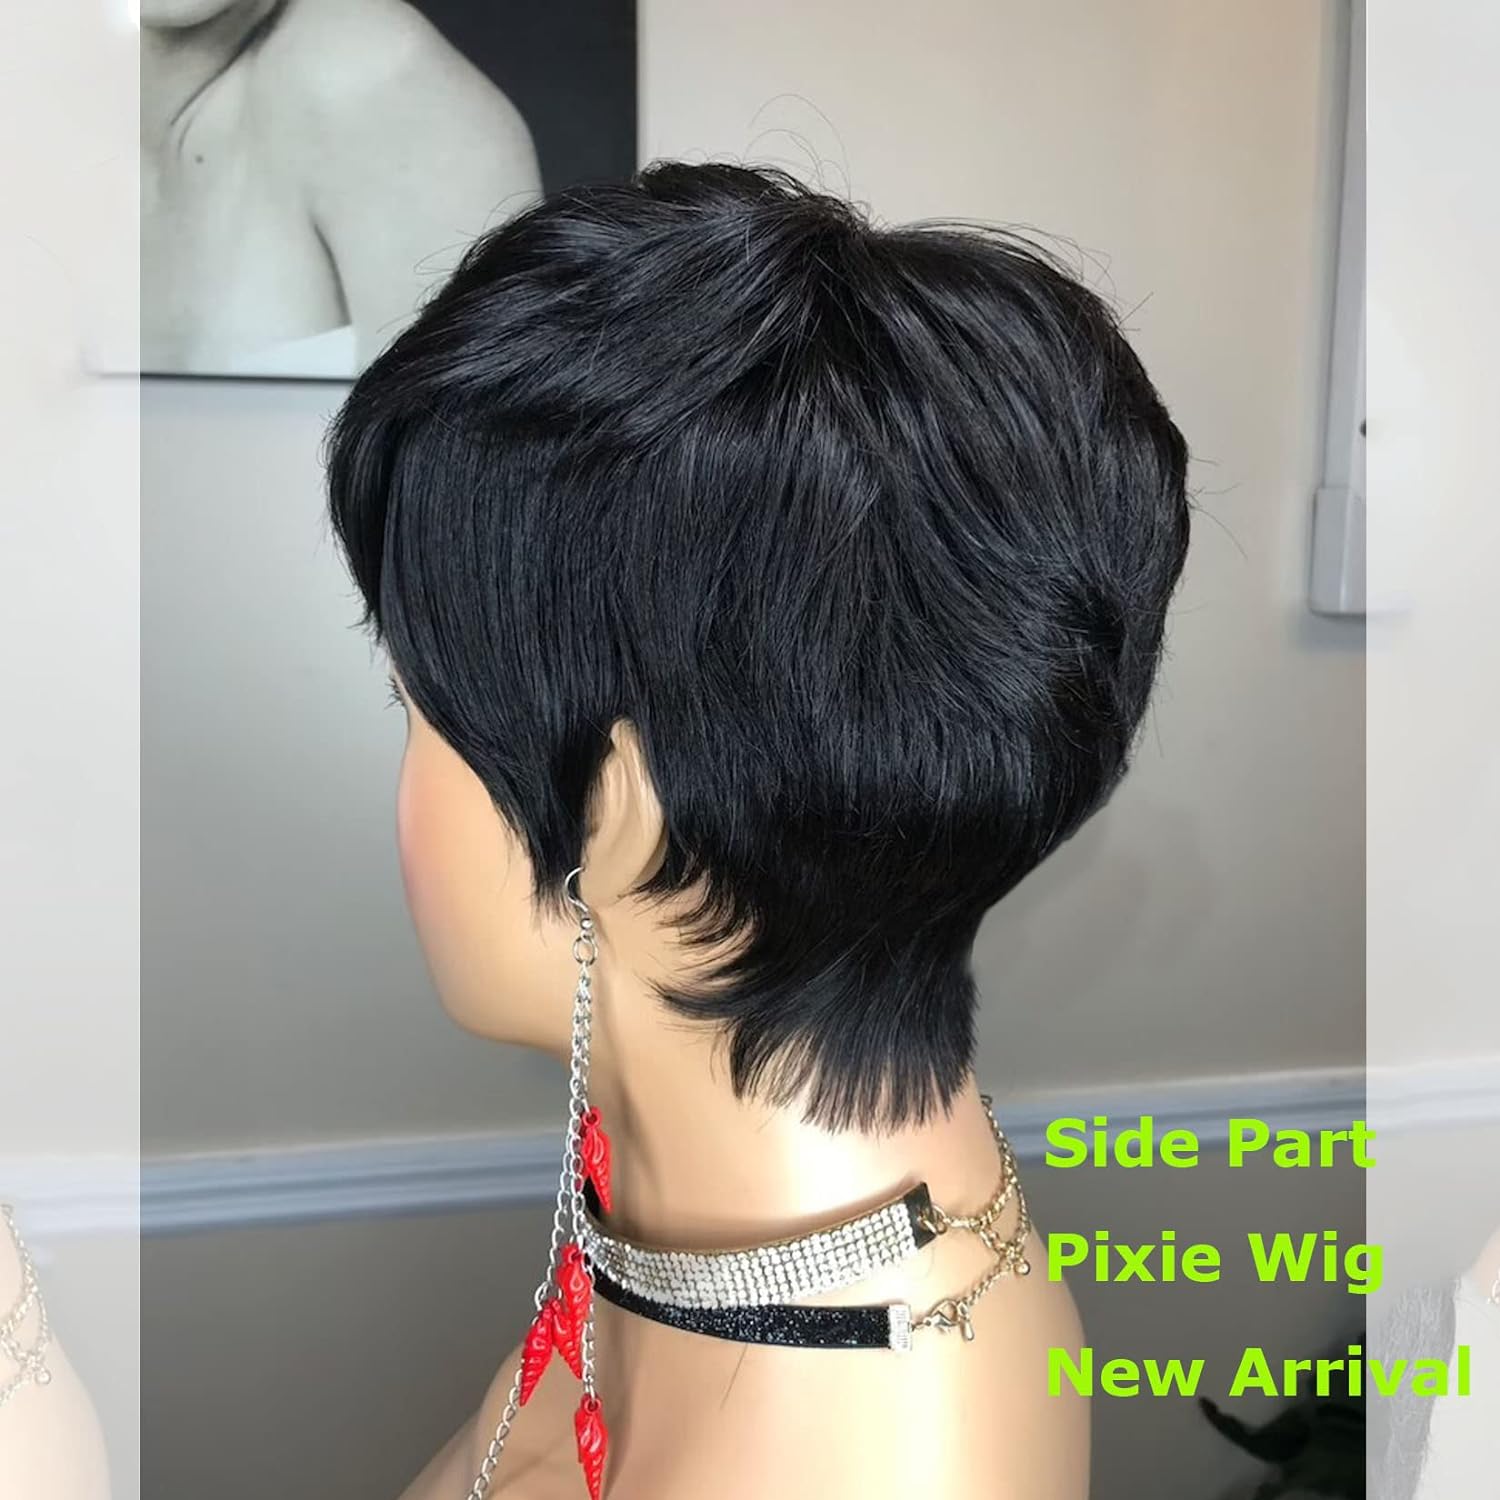 Pixie corte perucas para preto feminino cabelo humano corte curto bob peruca brasileira perucas de cabelo humano parte lateral pixie corte de cabelo perucas sem cola